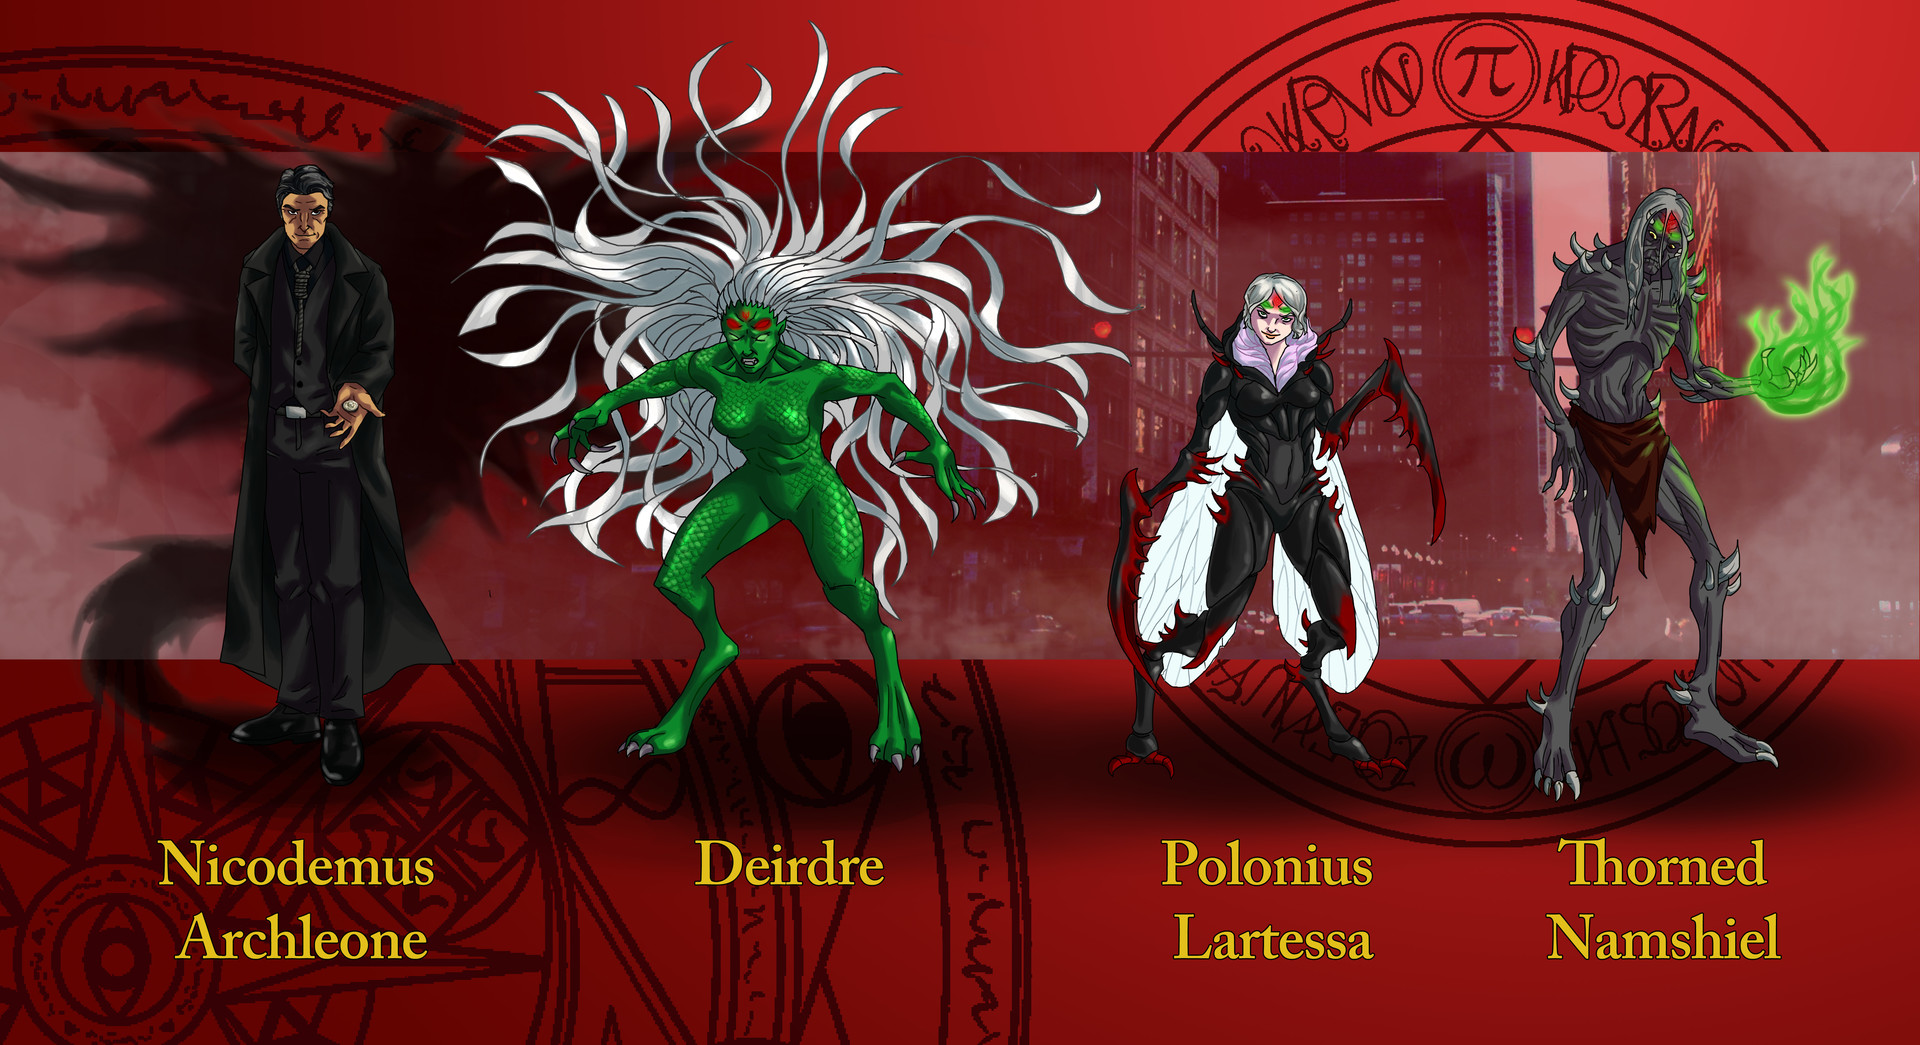 Conrad Atega - The Dresden Files character designs